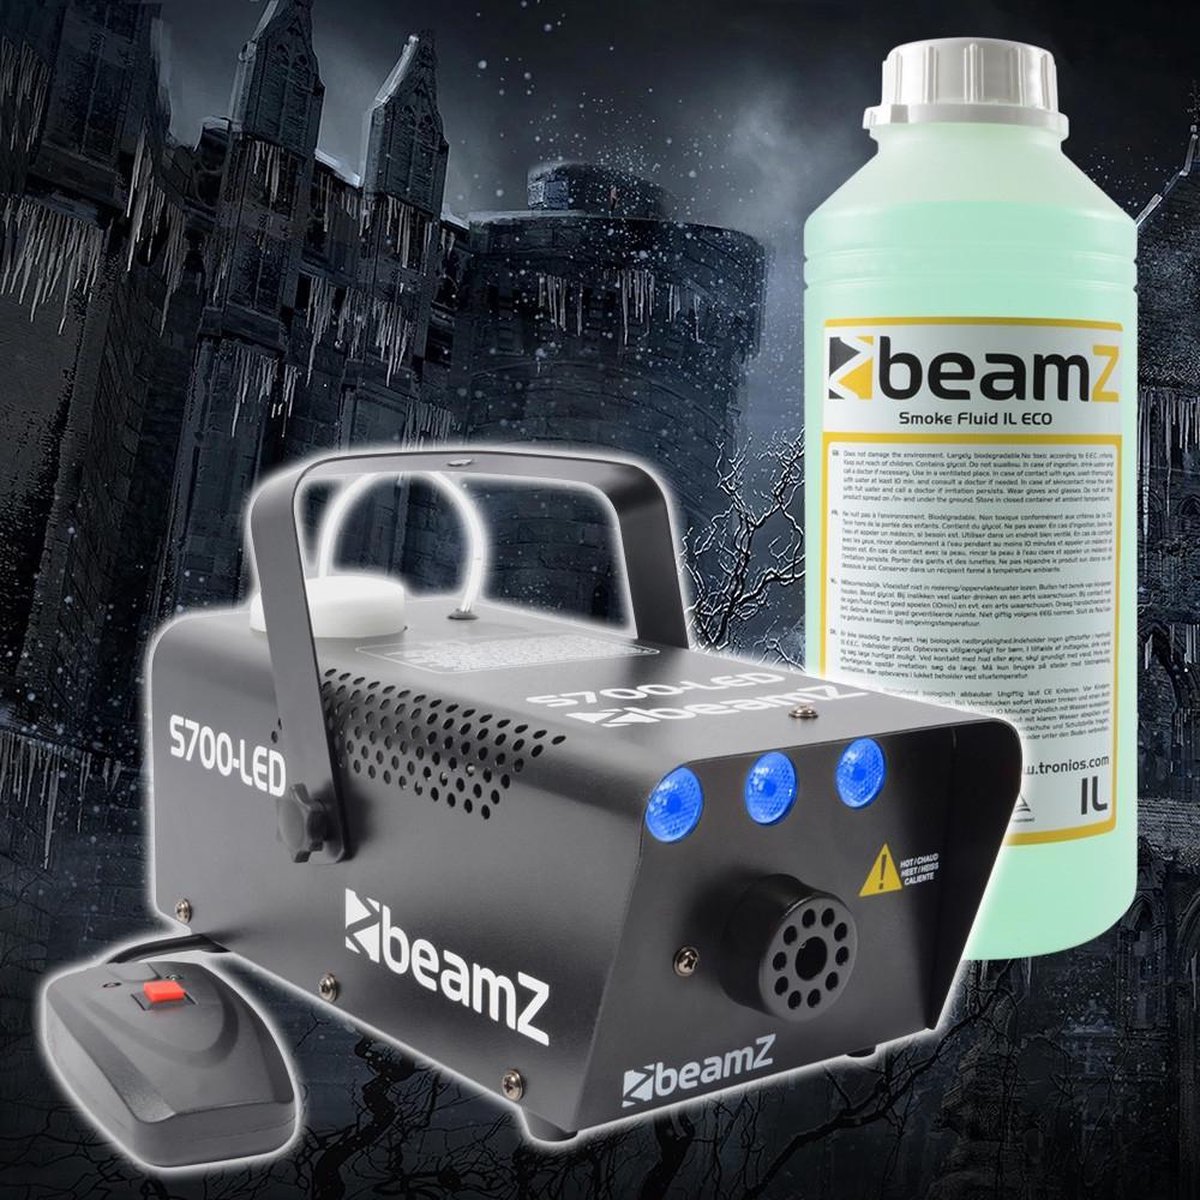 Halloween ICE feestpakket - BeamZ Halloween ICE feestpakket met S700LED ijs effect rookmachine en vloeistof